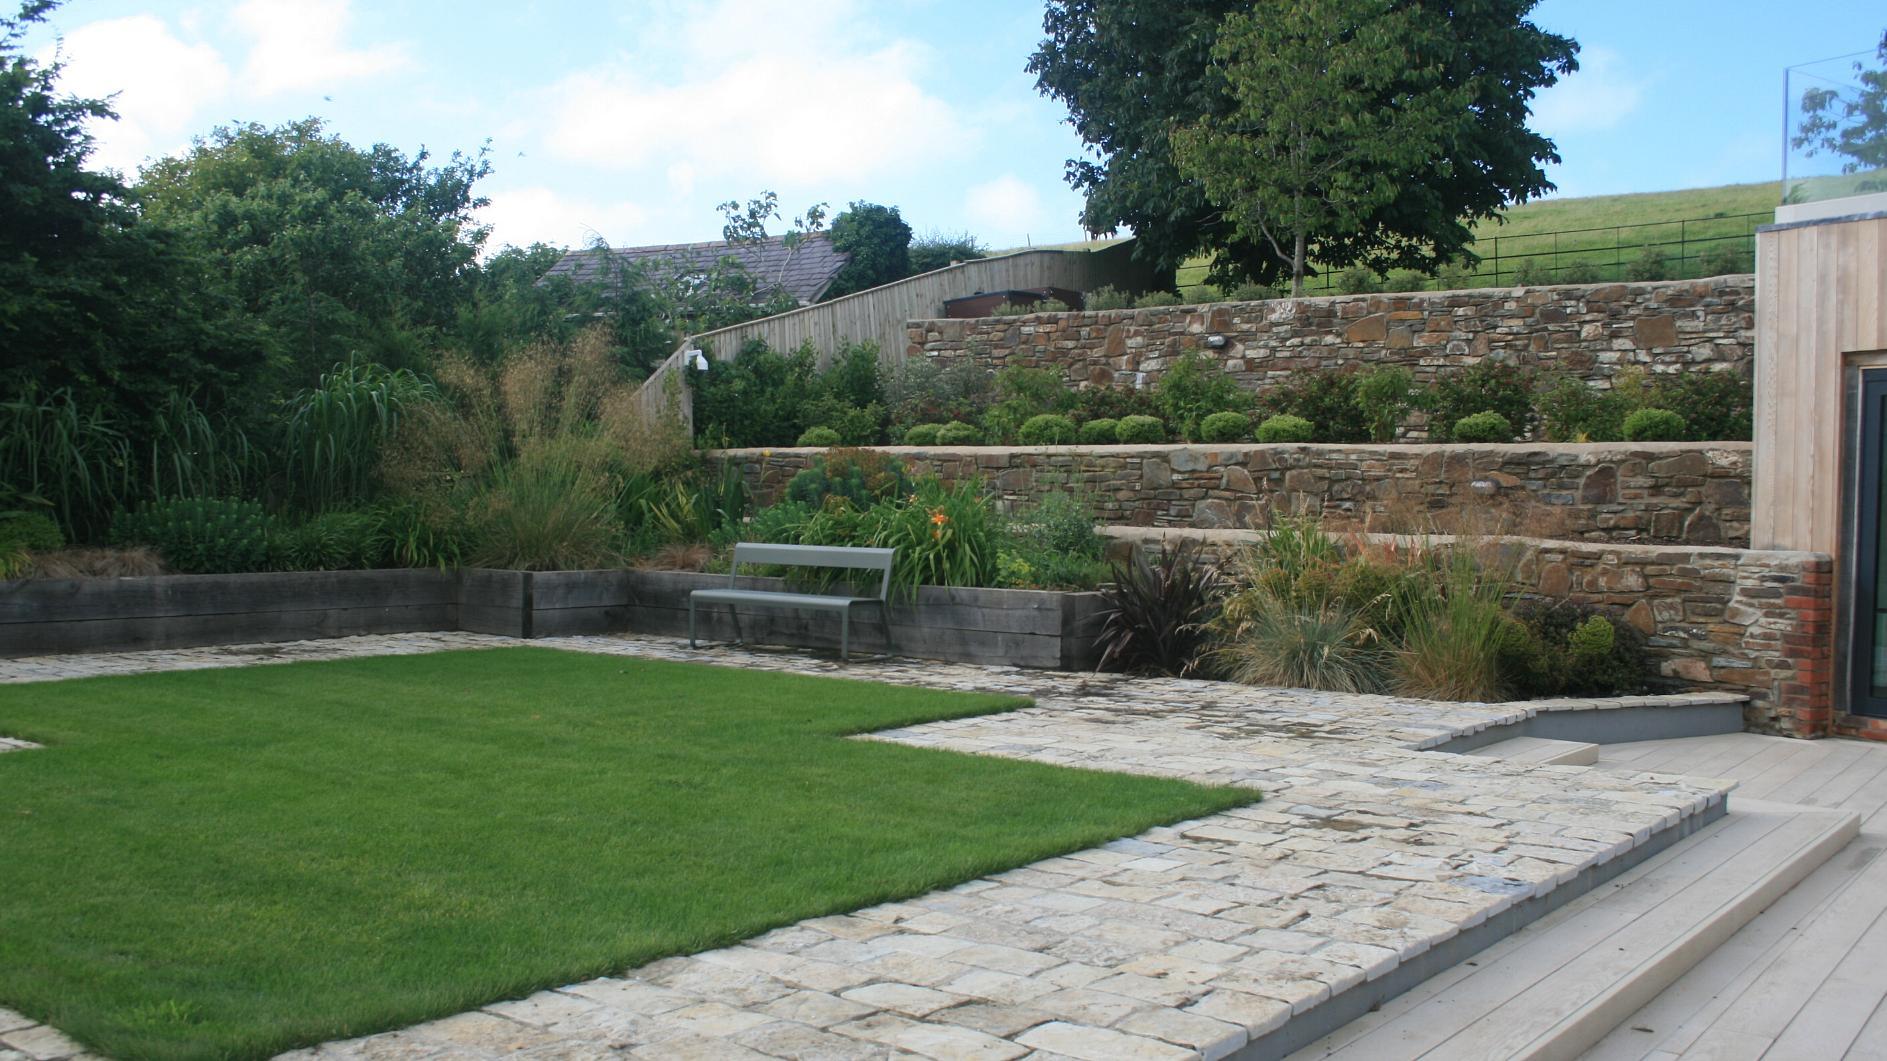 Alison Bockh Garden Design and Landscaping - North Devon - Lawn area over 5 car garage and raised beds